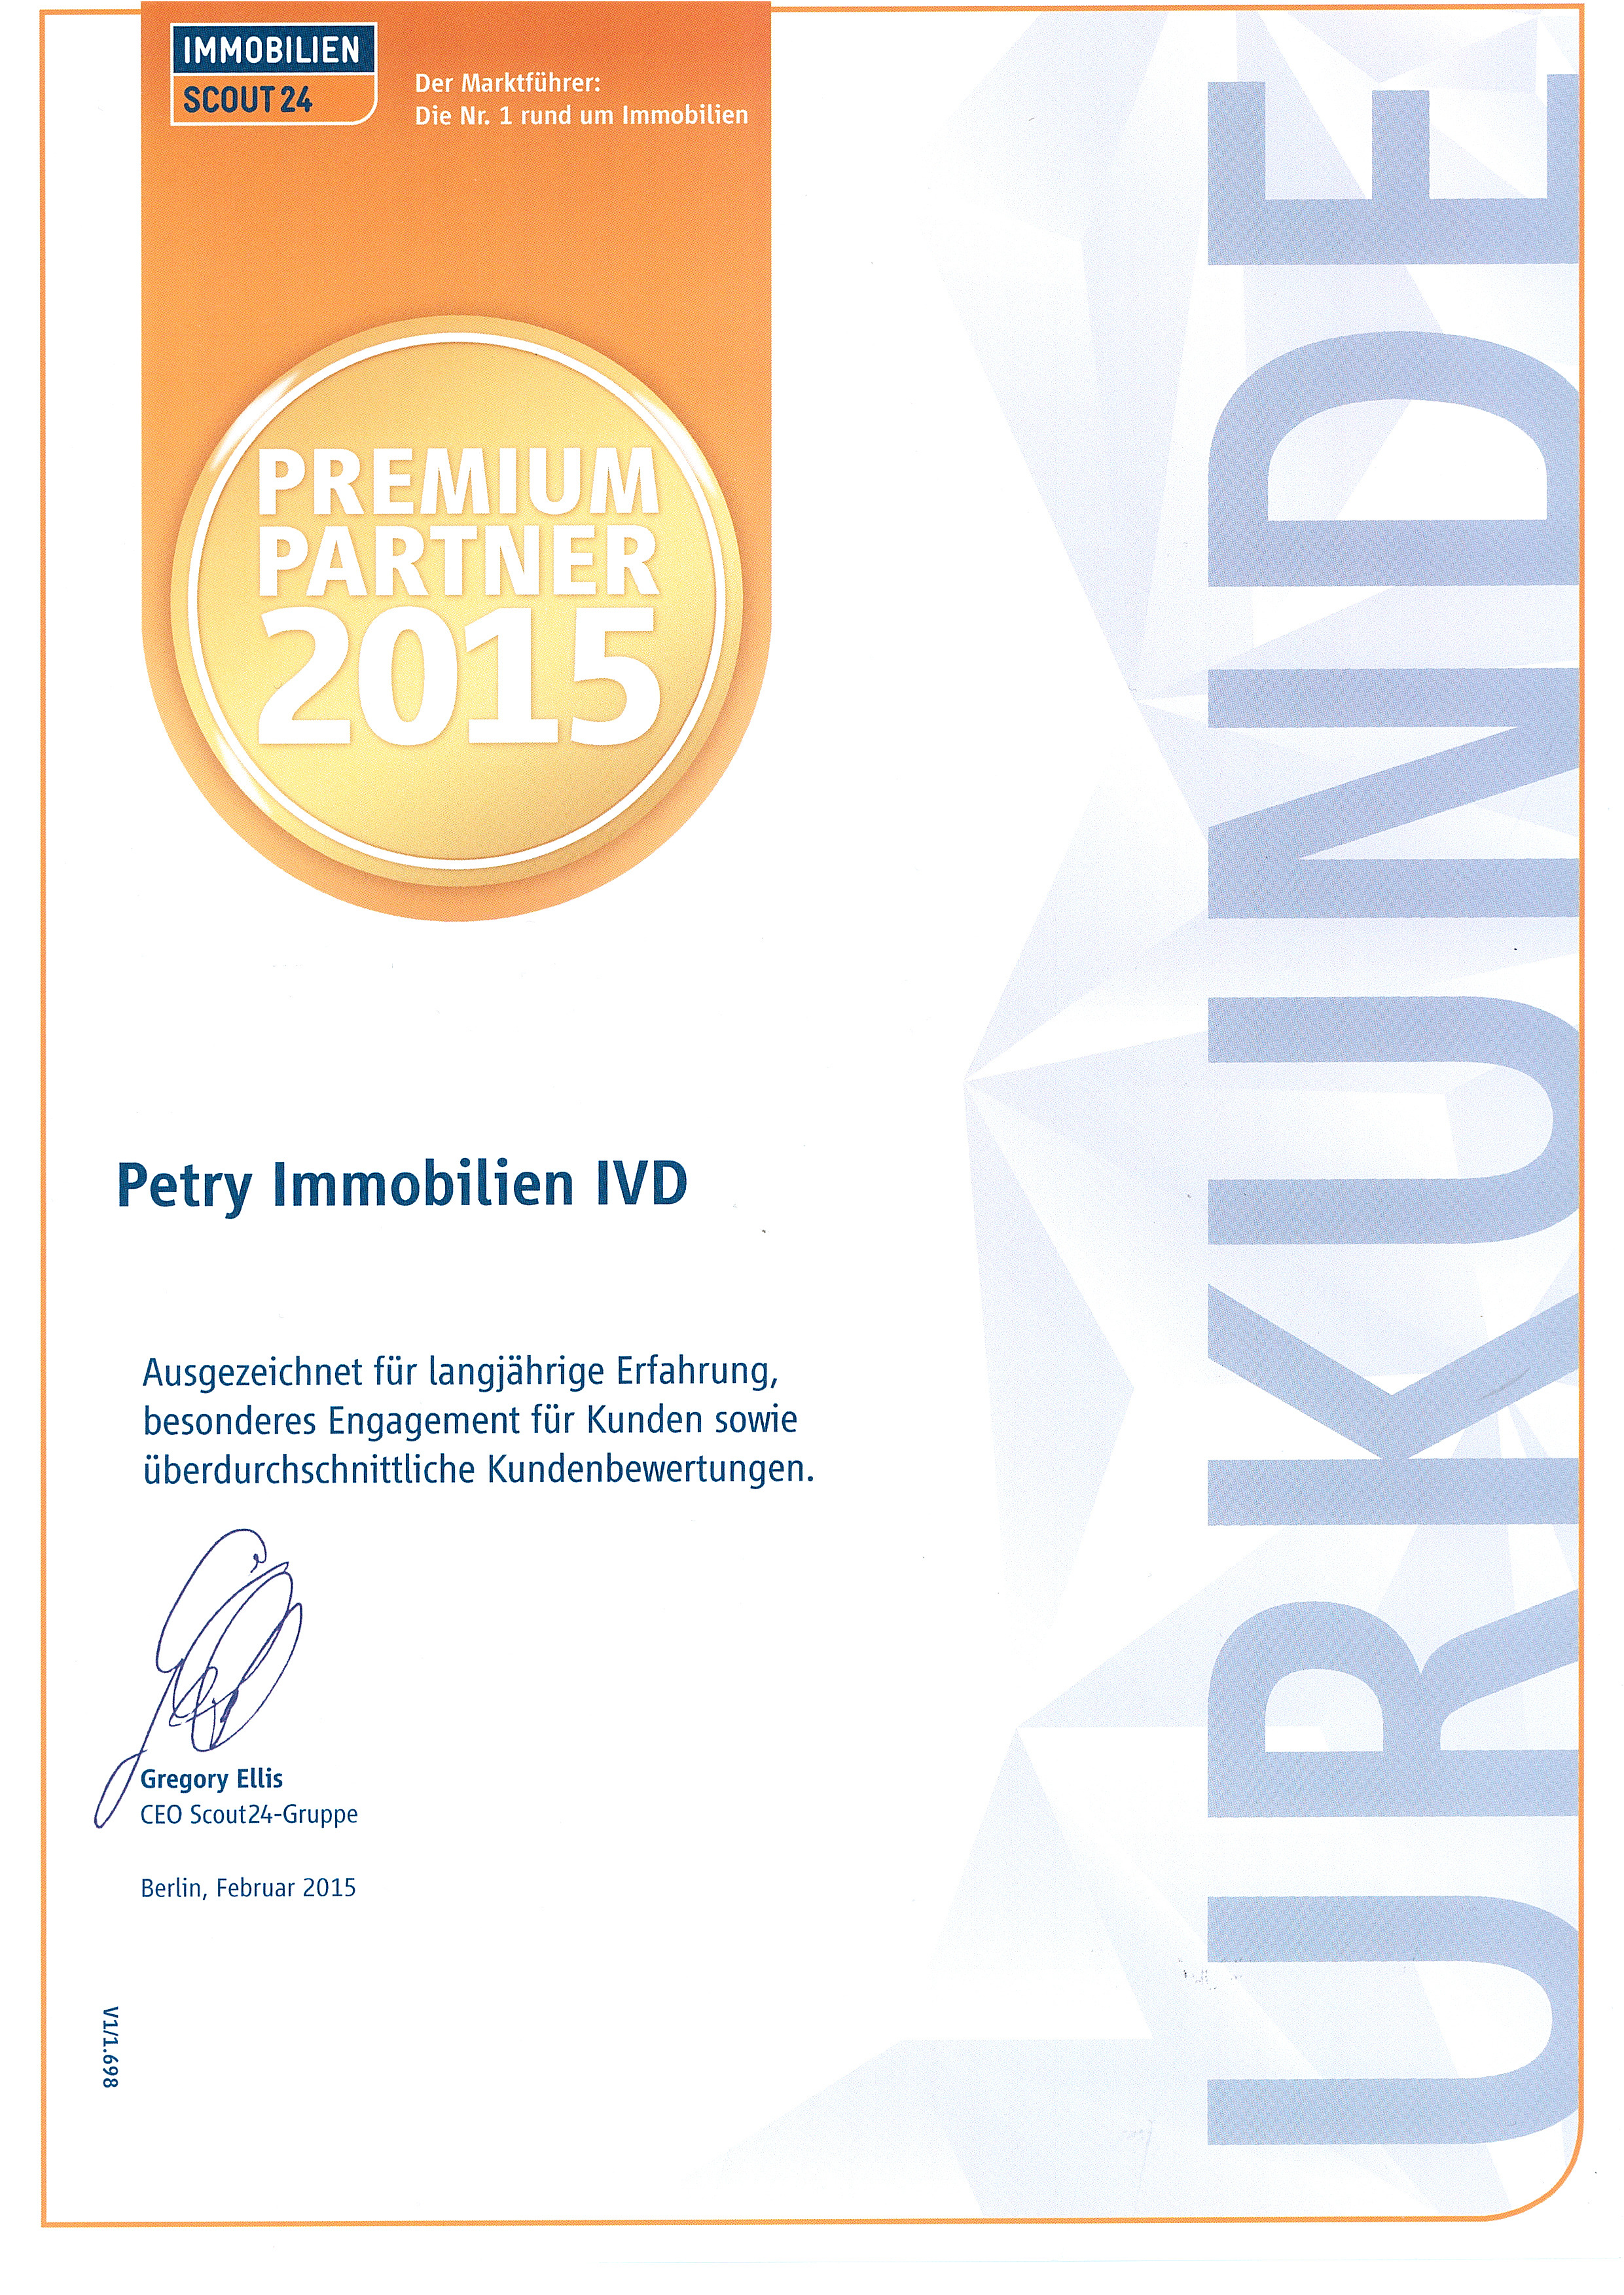 PETRY Immobilien ist Immobilienscout24 - Premiumpartner 2015